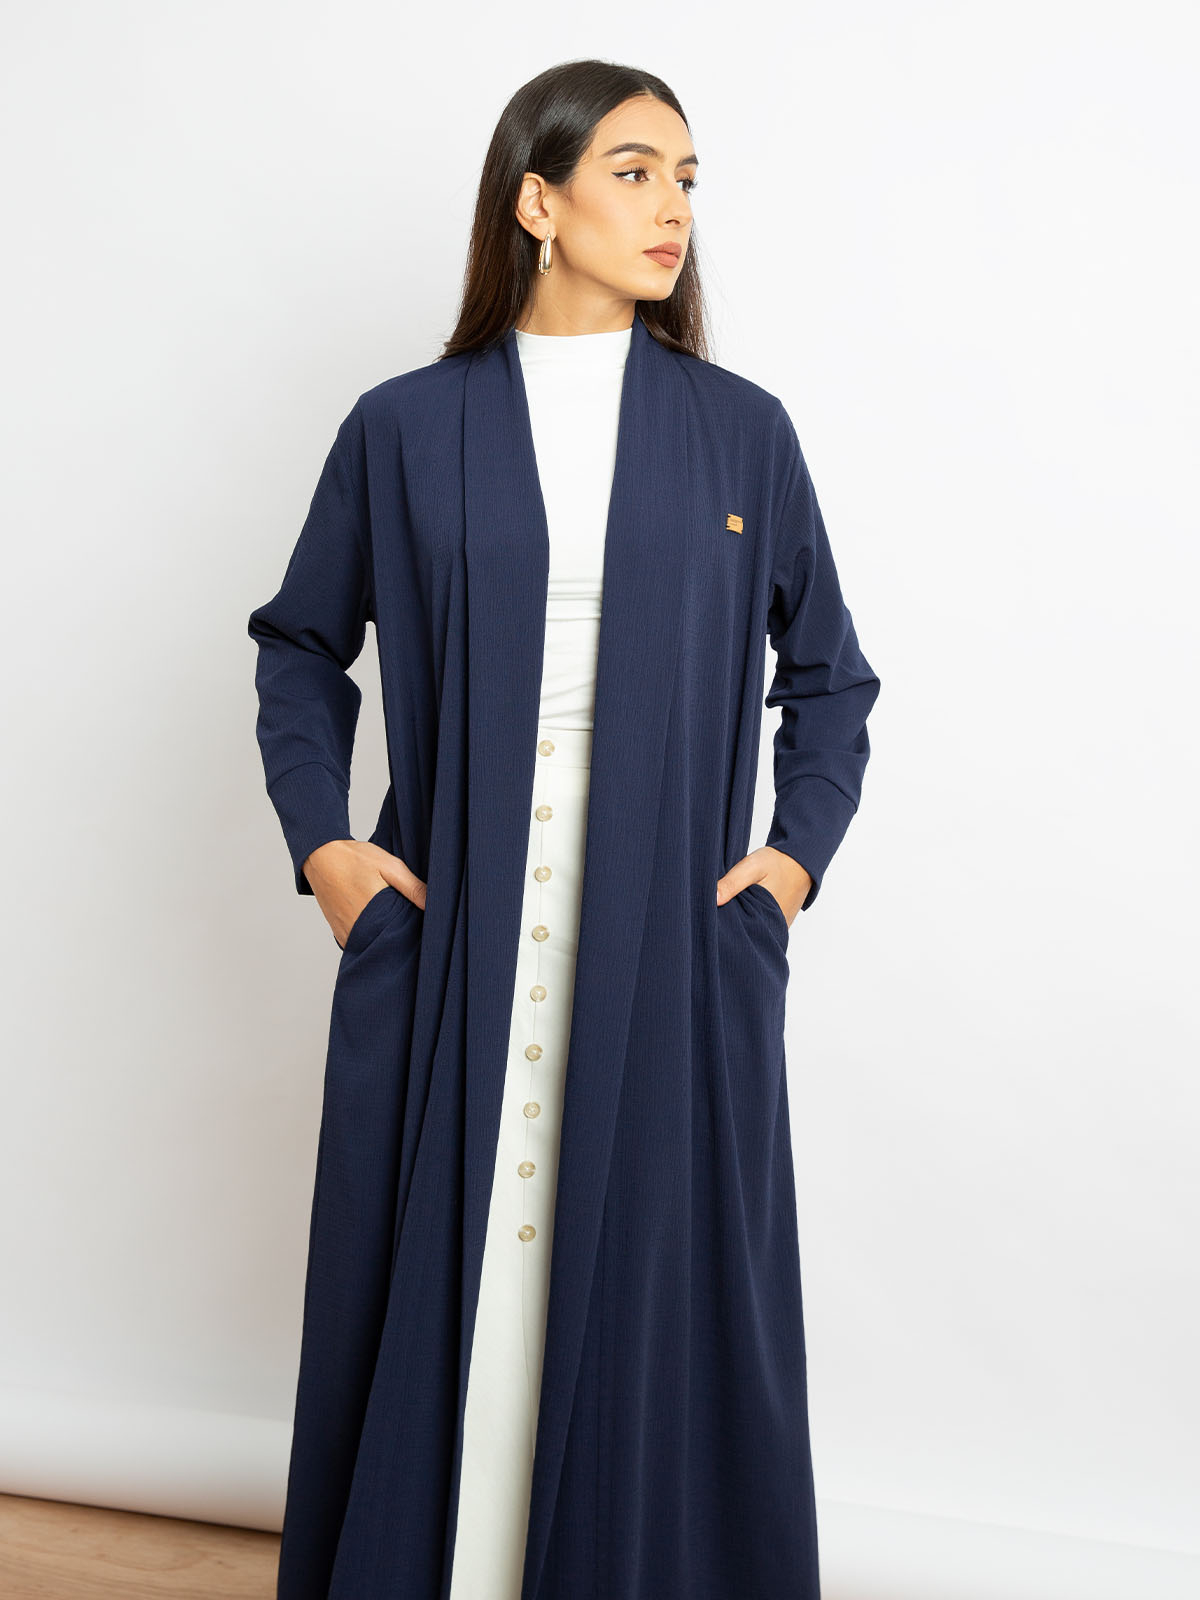 Kaafmeem women clothing regular fit navy color long open abaya in yoryu fabric with hidden pockets